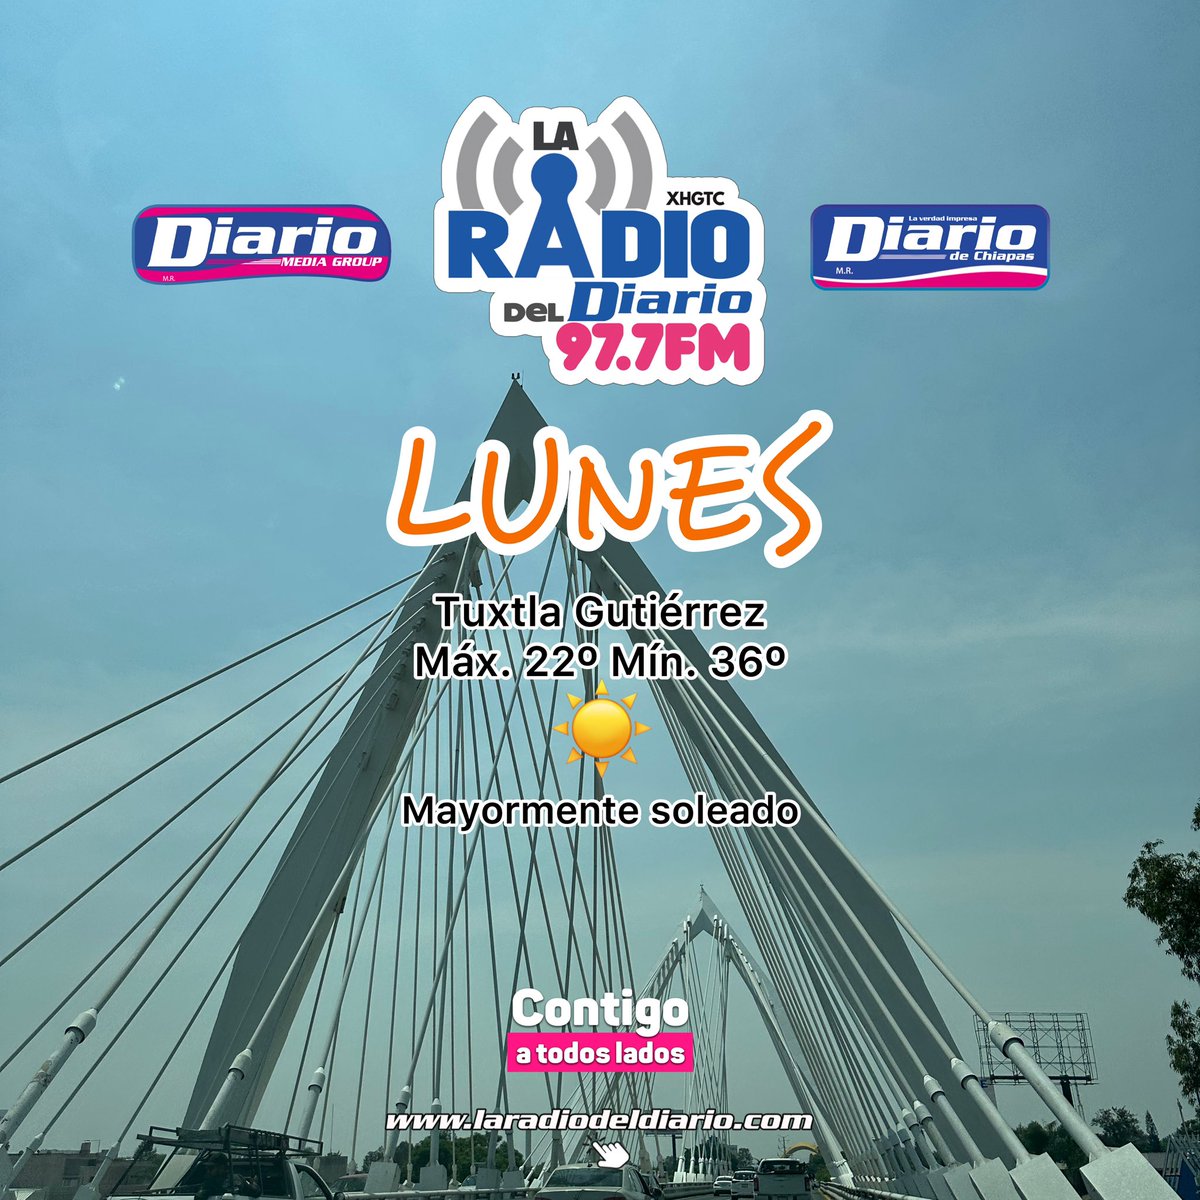 #ExcelenteLunes 🫂🎶

Te abrazamos con la música, 97.7 FM

#LaRadioDelDiario #musica #radio